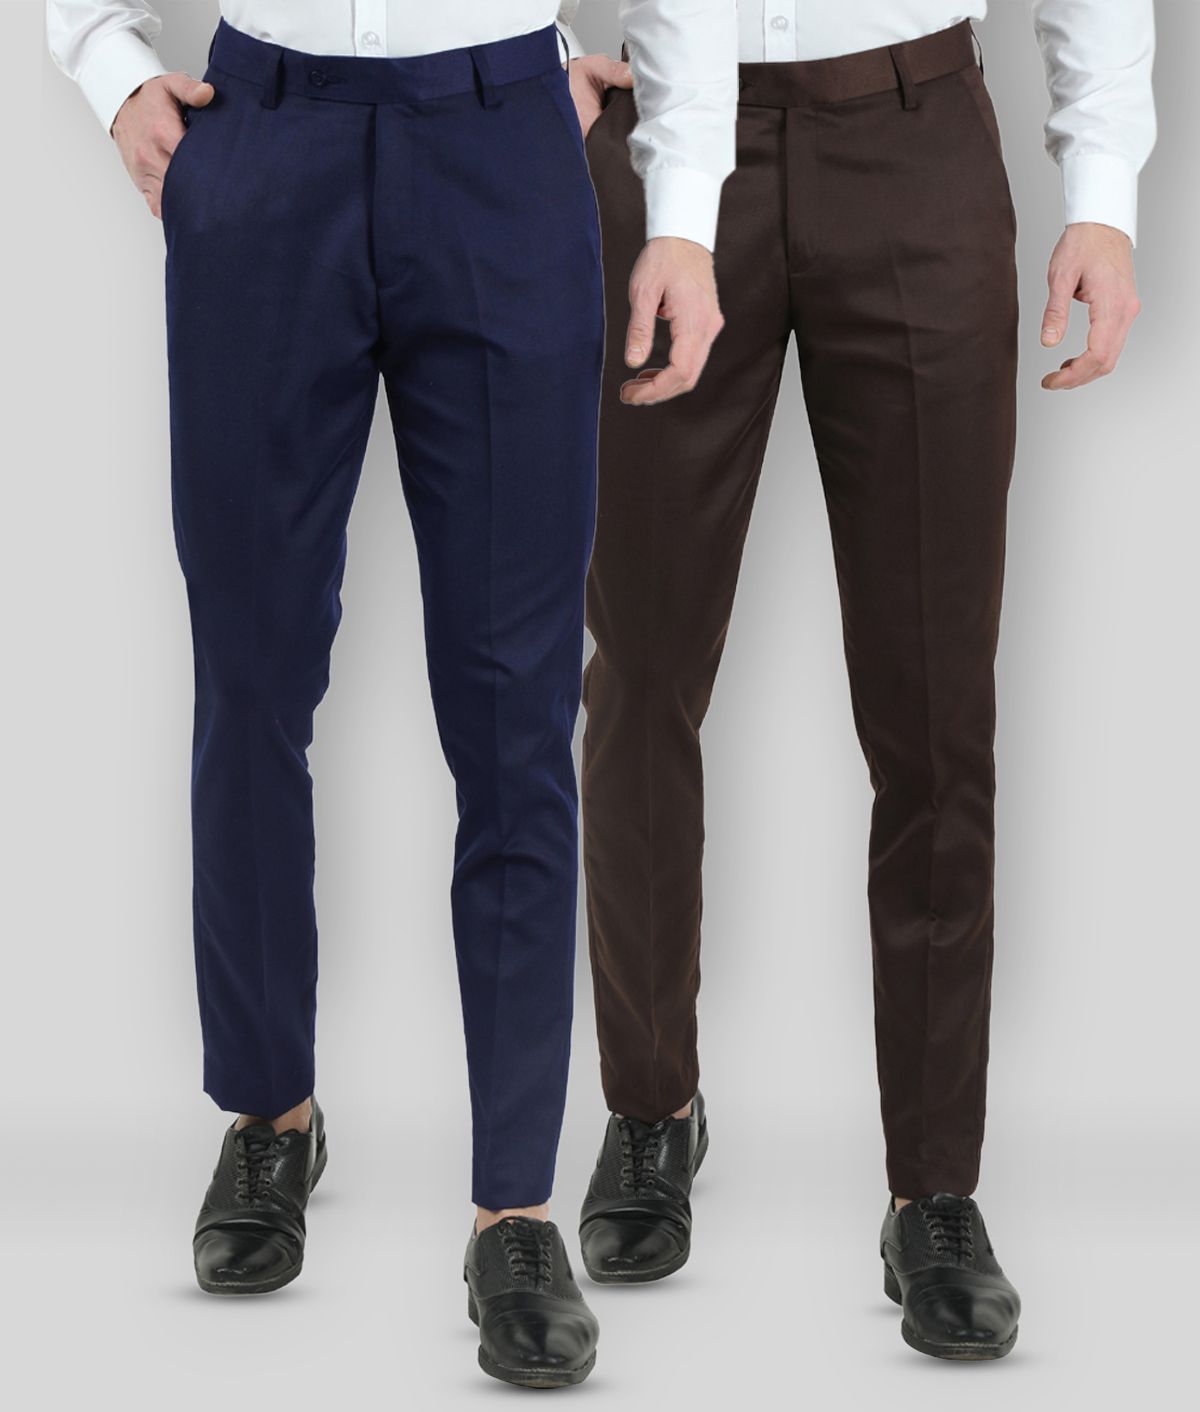     			VEI SASTRE - Multicolor Cotton Blend Slim Fit Men's Formal Pants (Pack of 2)